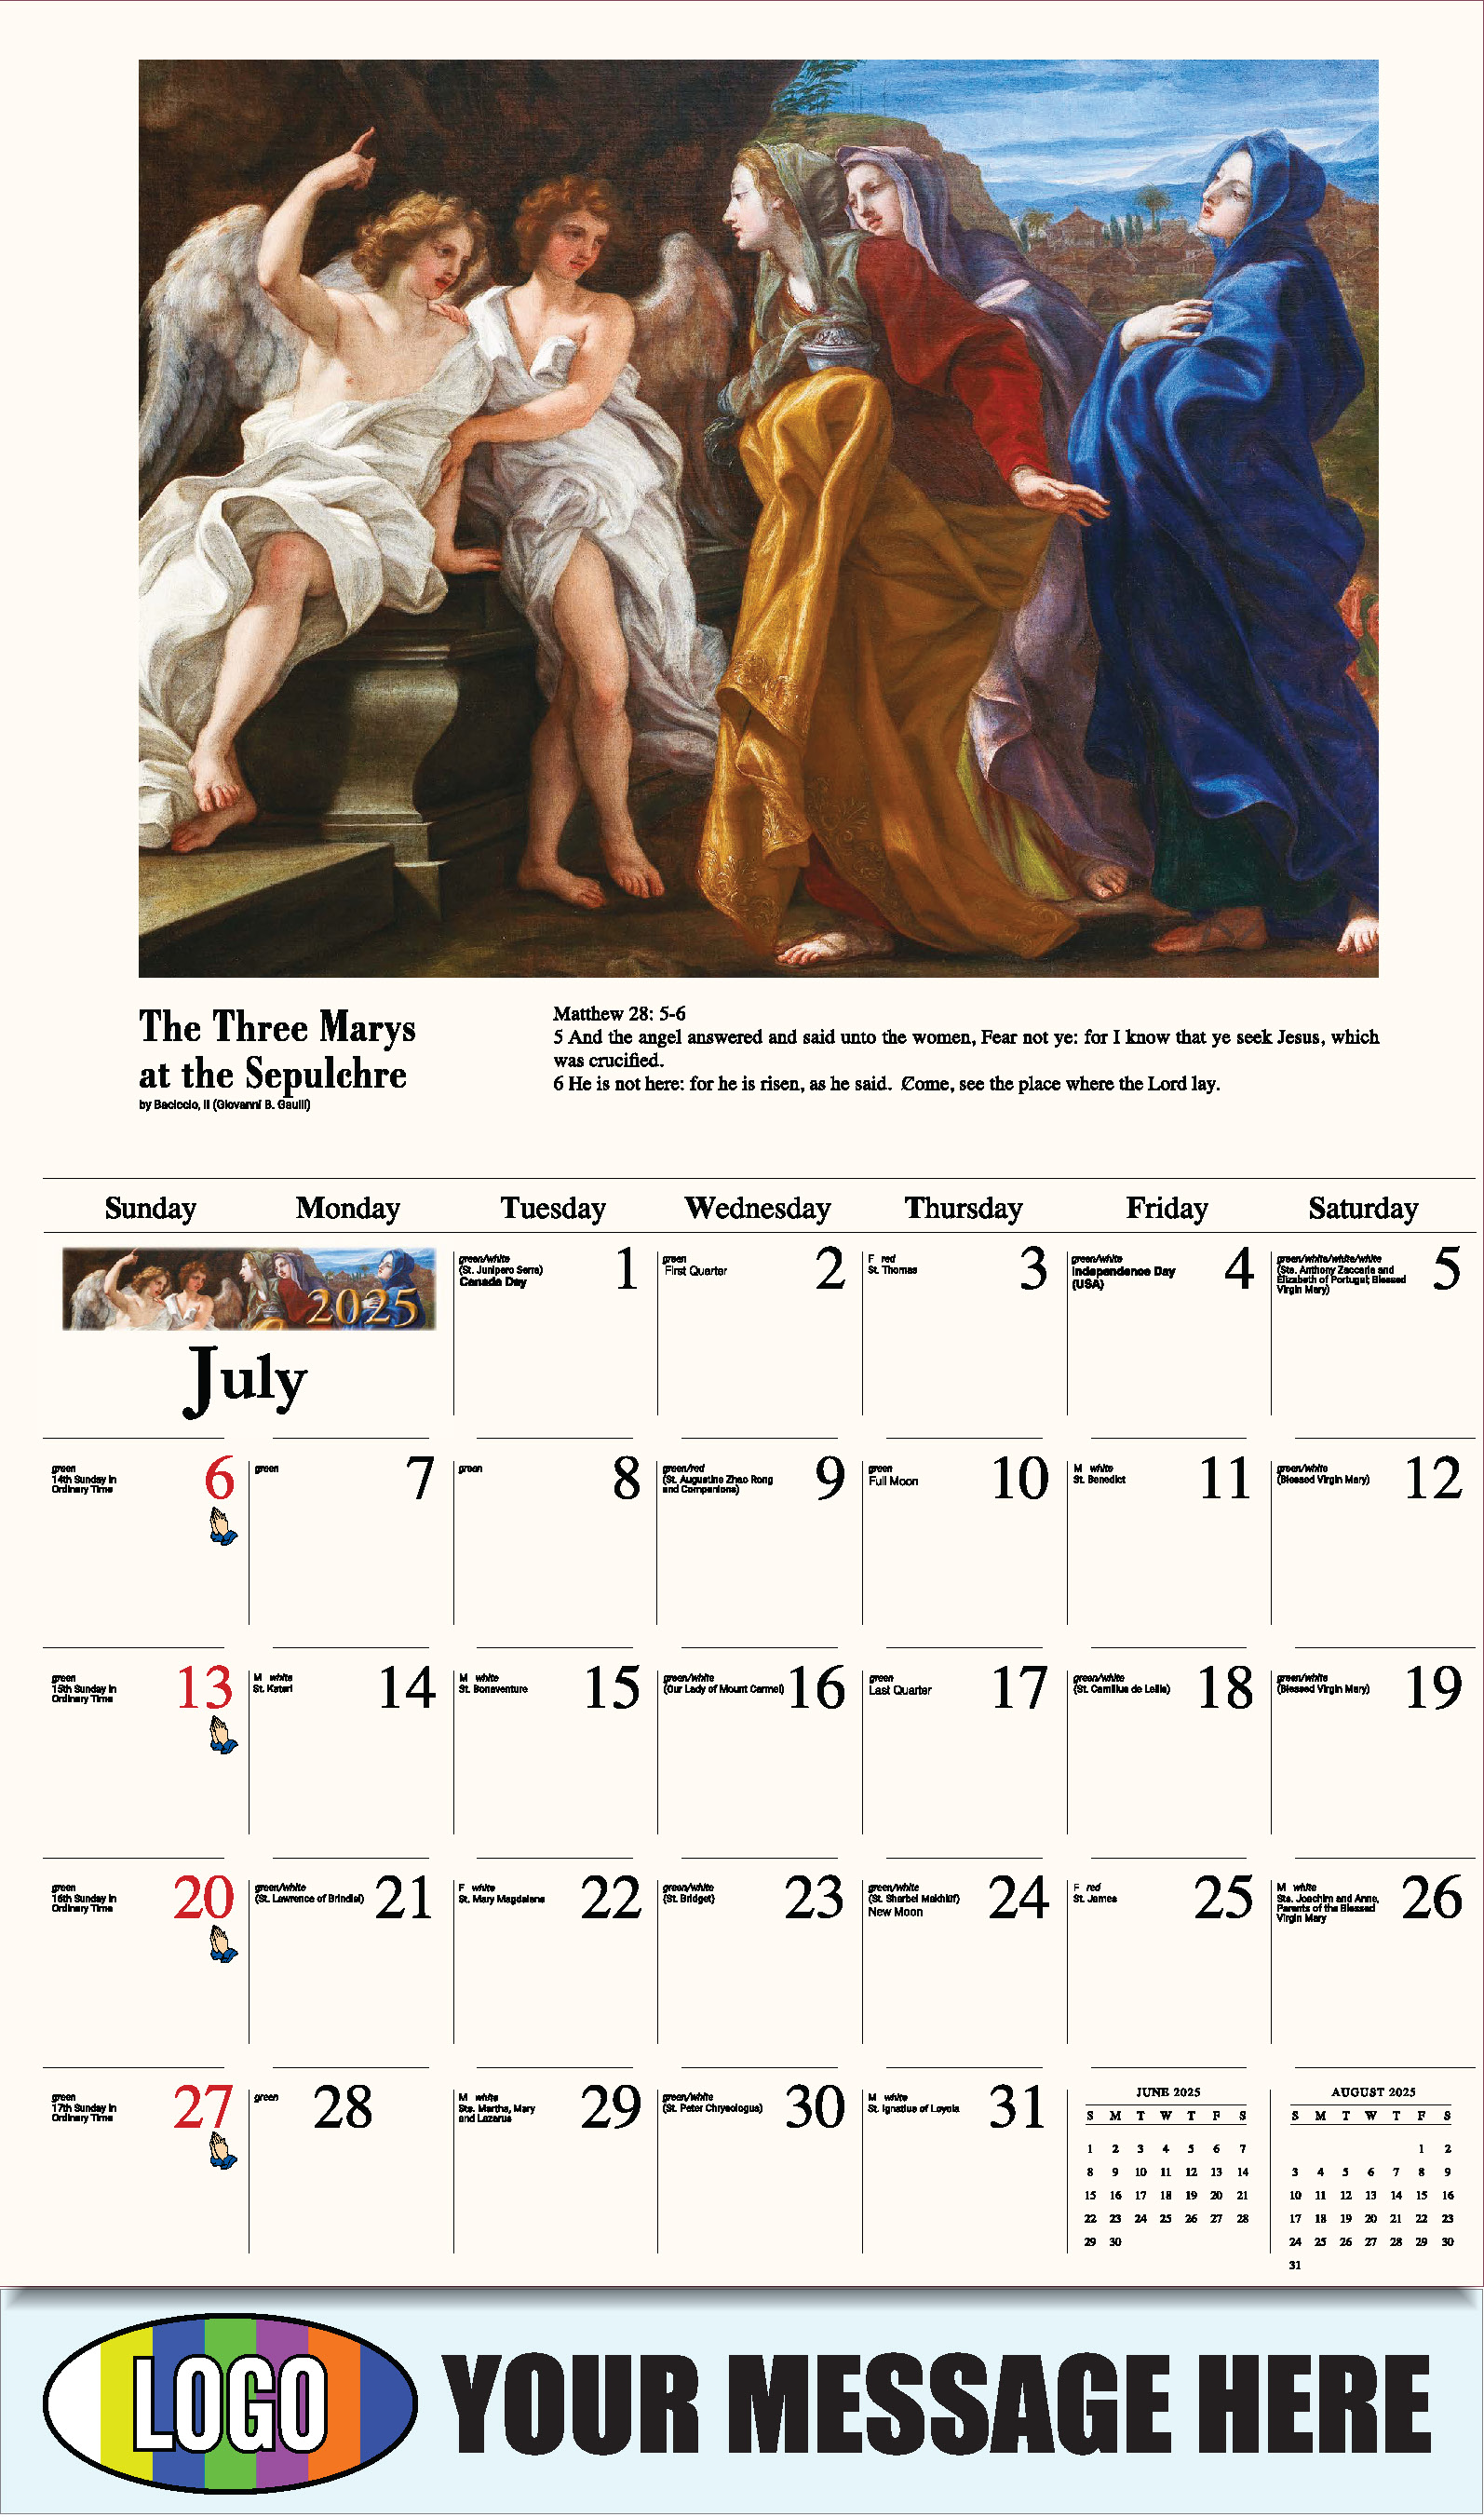 Catholic Inspirations 2025 Church Promotion Calendar - July